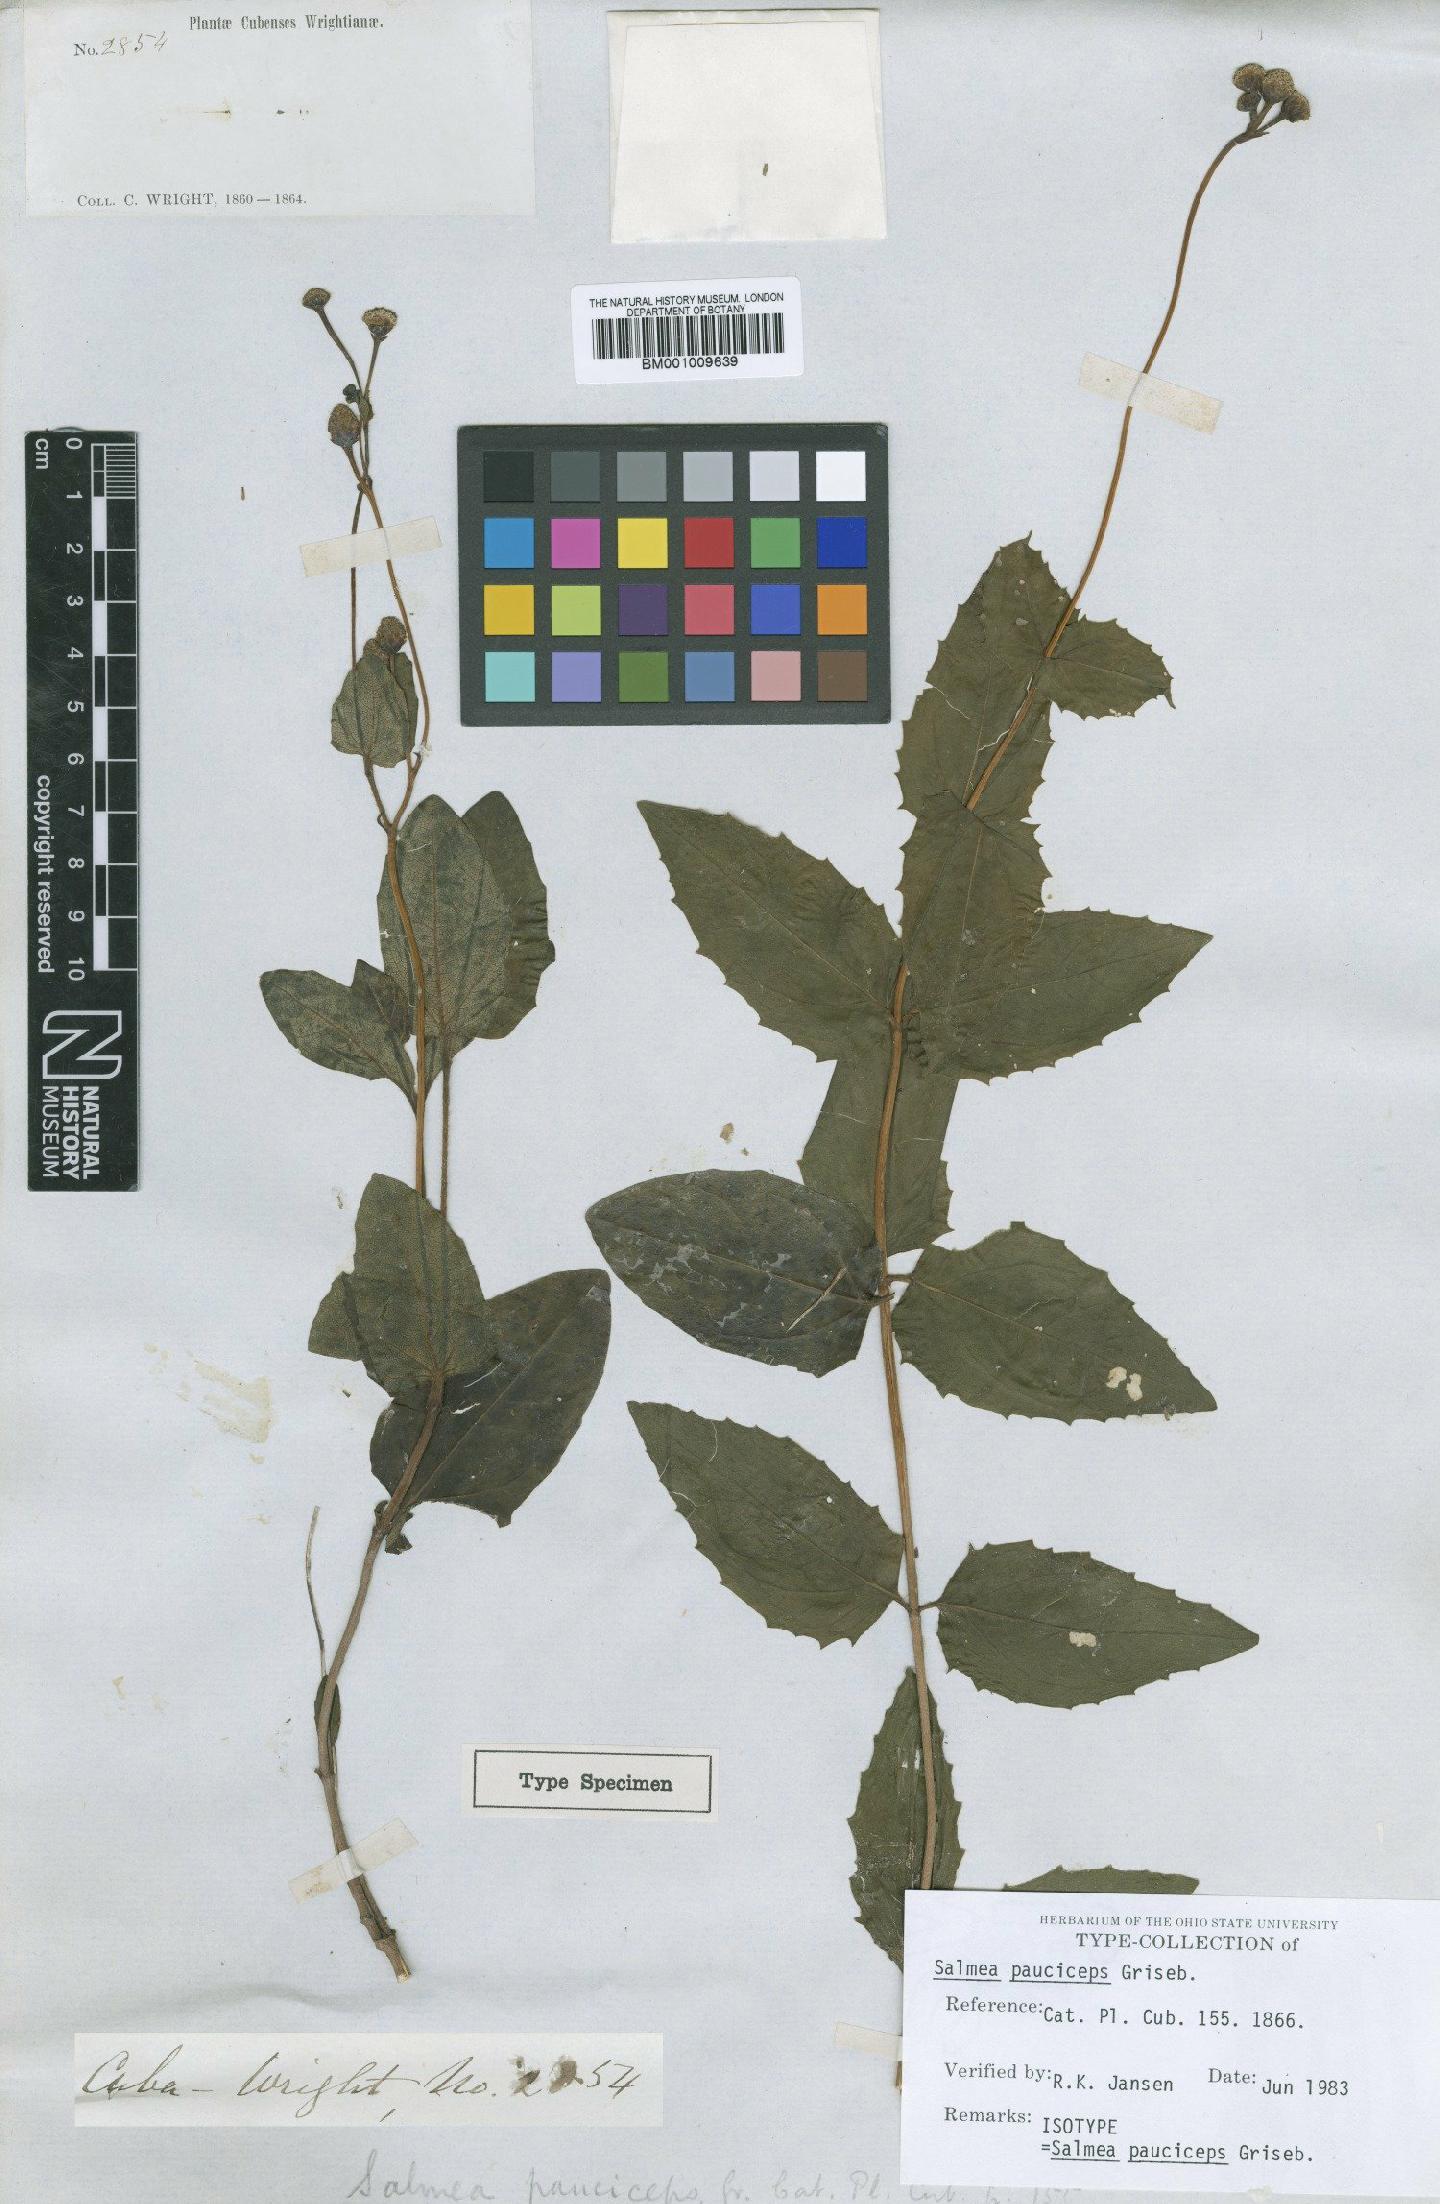 To NHMUK collection (Salmea pauciceps Griseb.; Isotype; NHMUK:ecatalogue:617076)